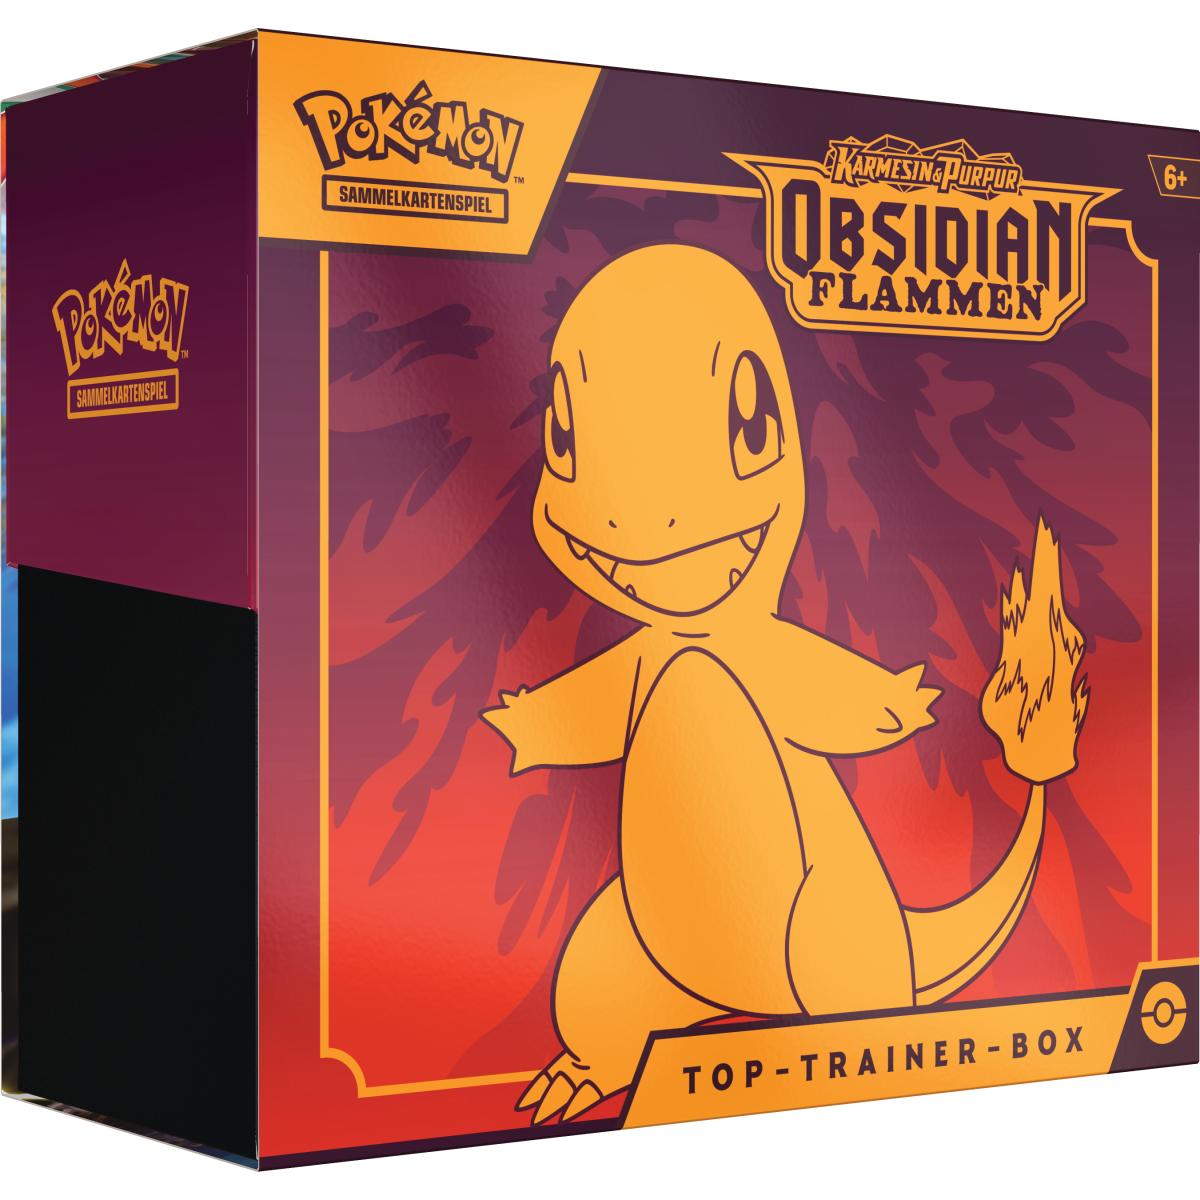 Pokémon - Top-Trainer-Box: Karmesin & Purpur - Obsidian Flammen